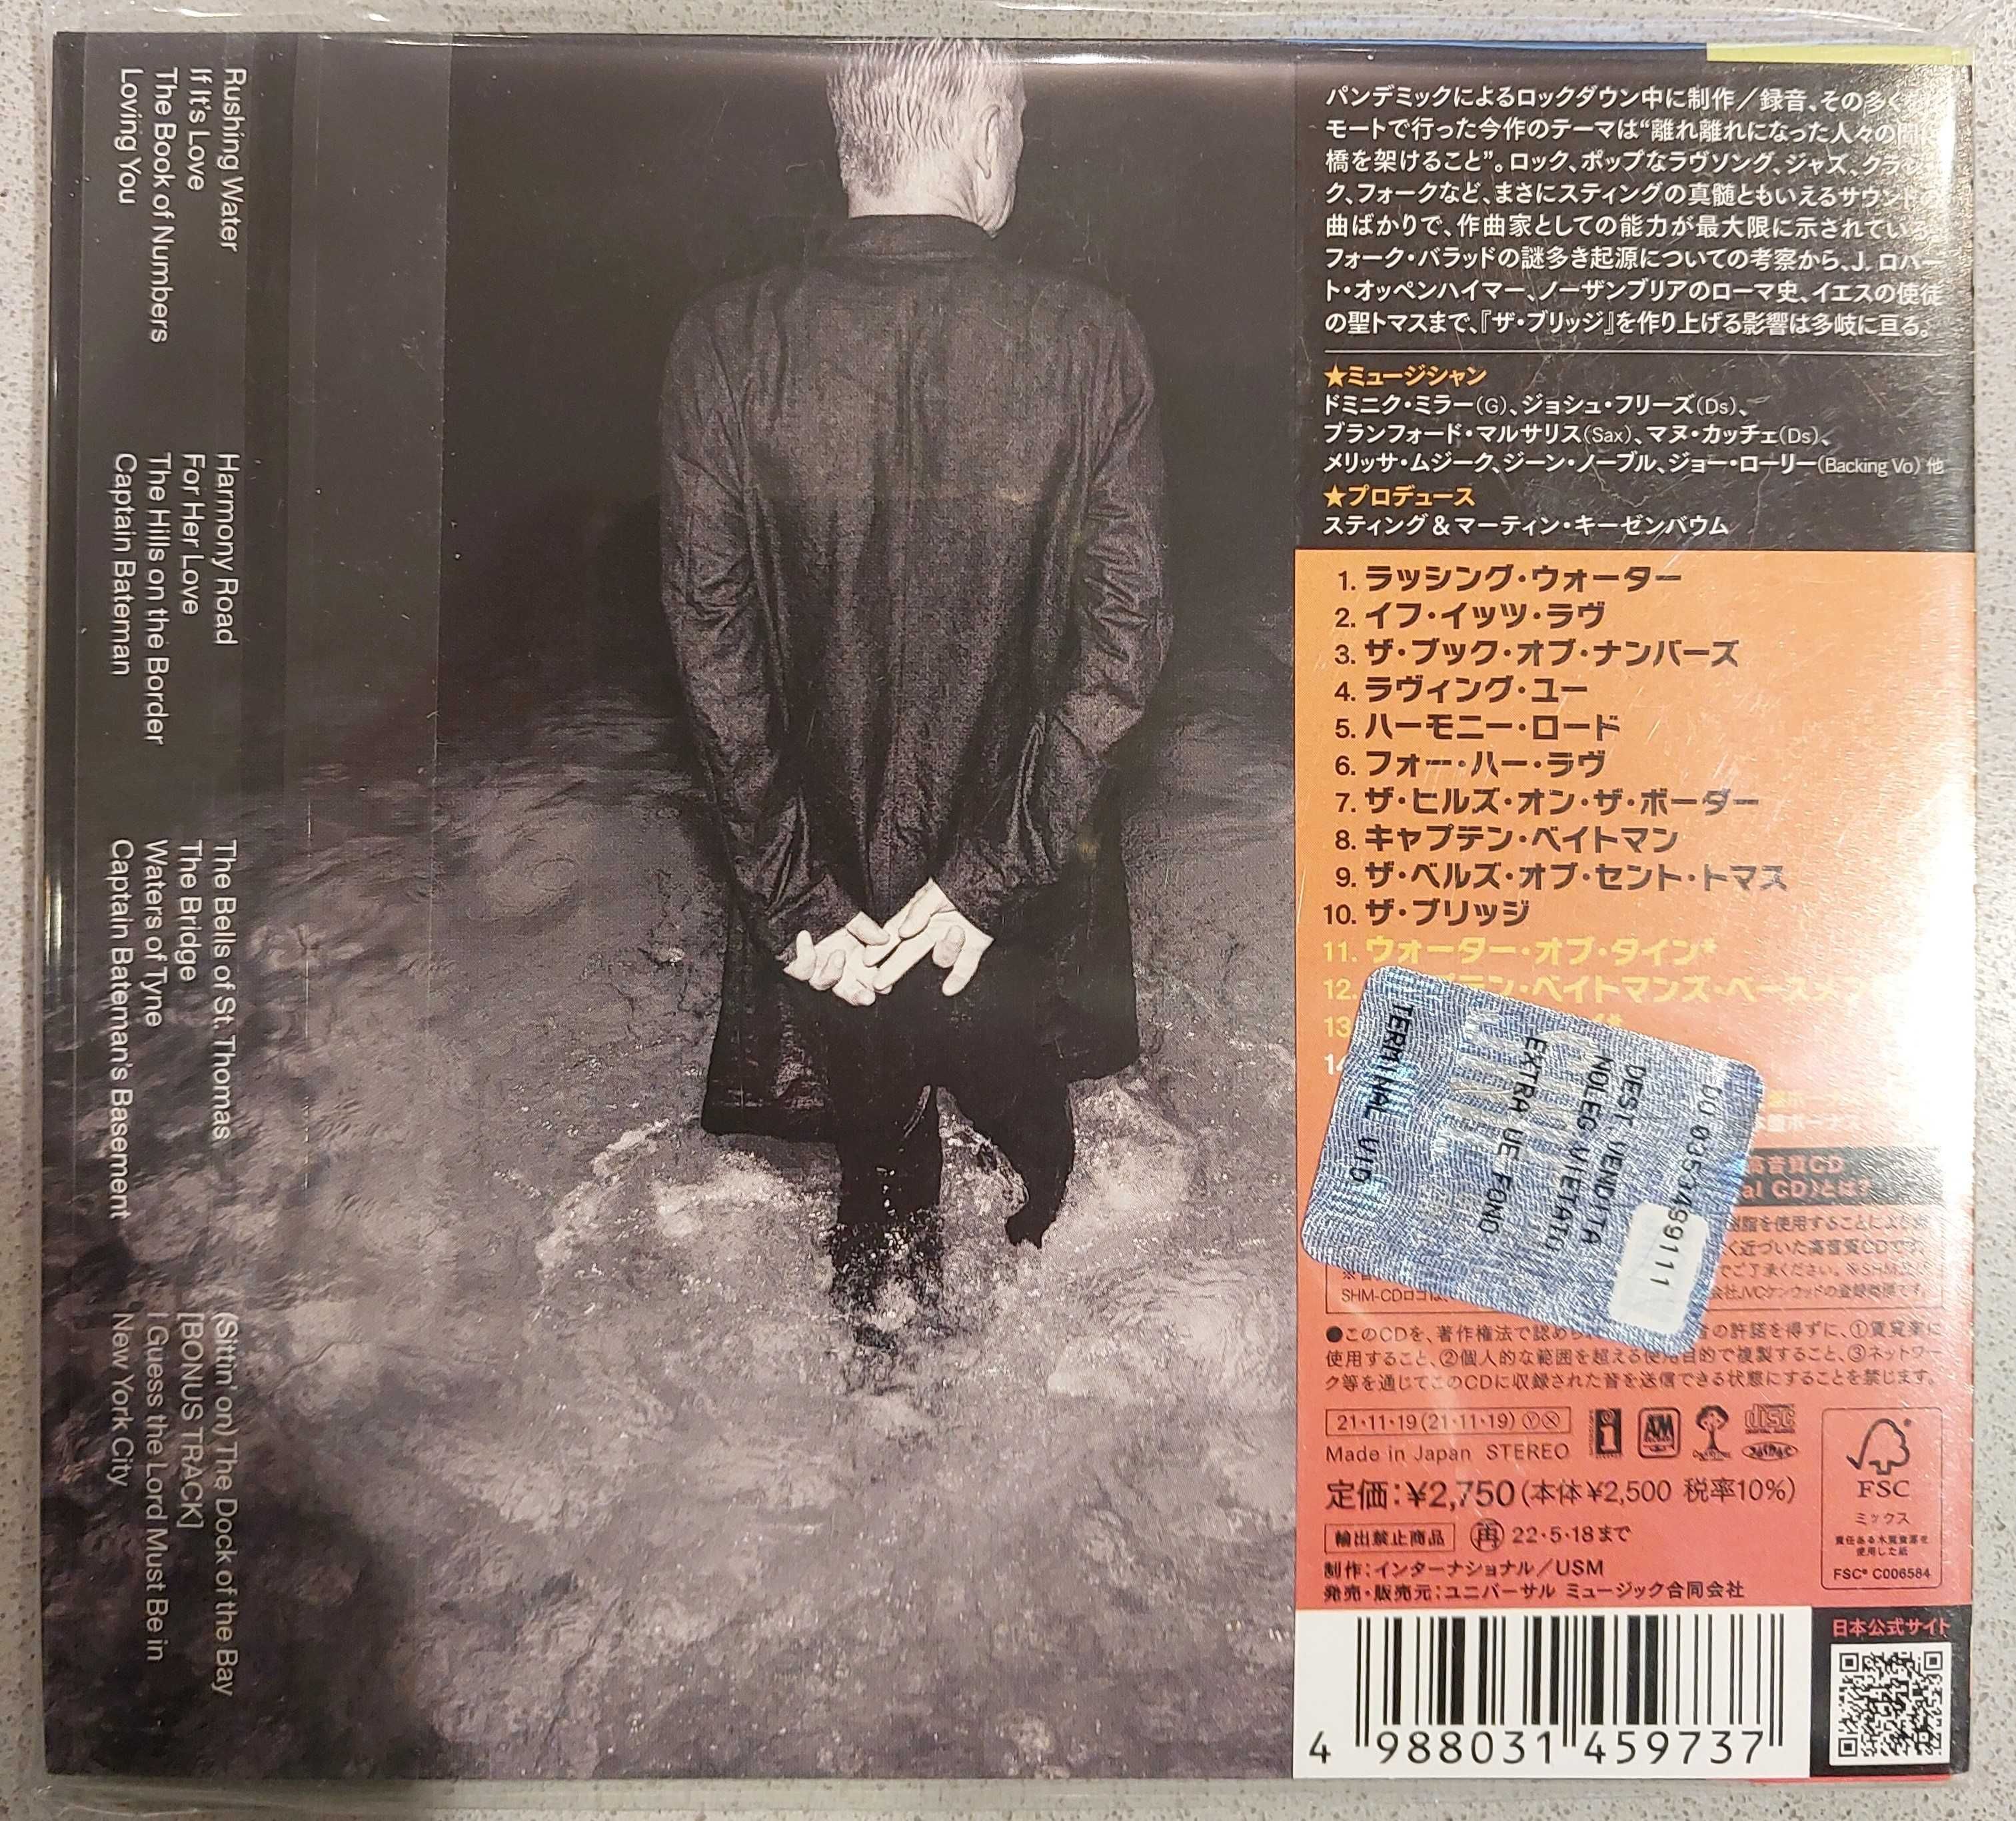 Sting The Bridge SHM-CD Japan incl.Bonus Track nowa w folii